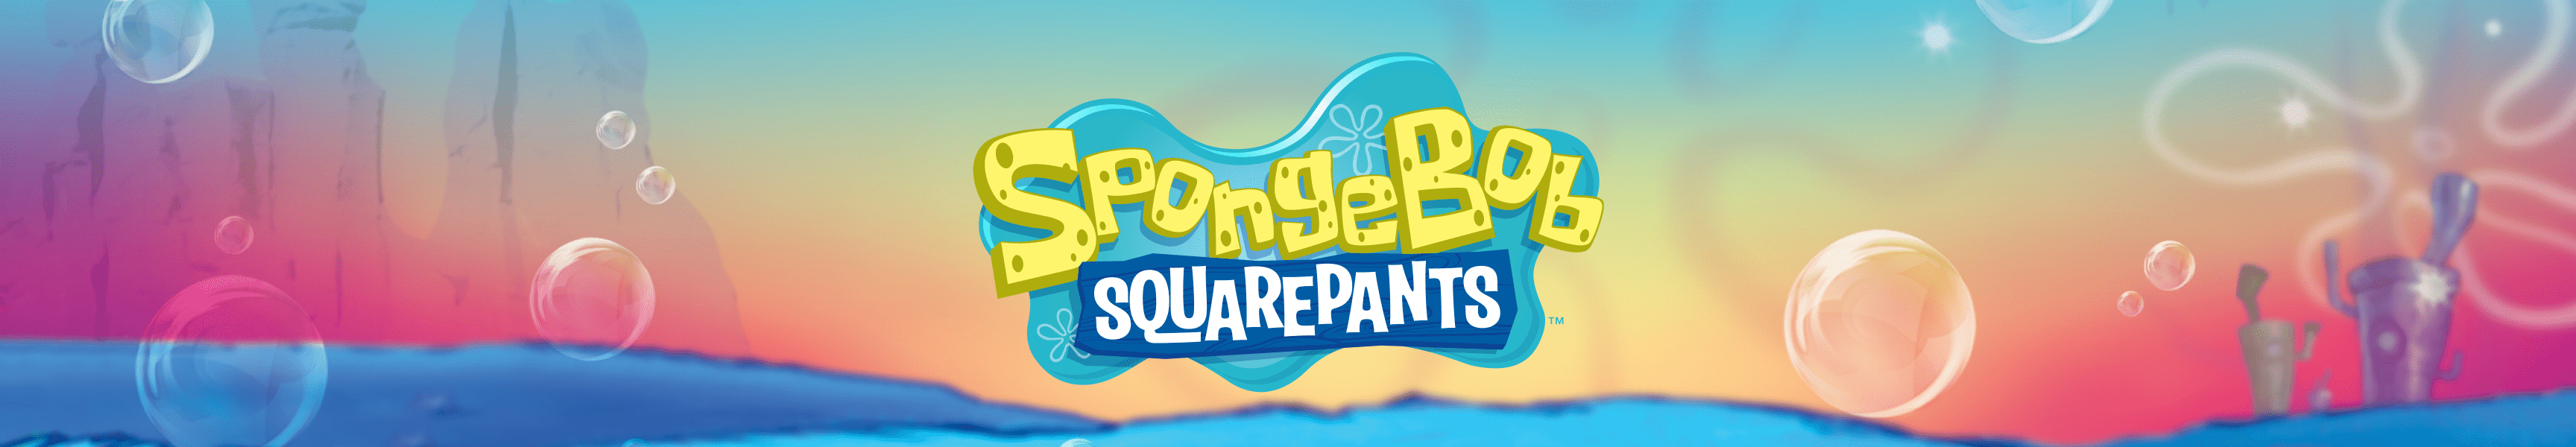 SpongeBob SquarePants Jewelry